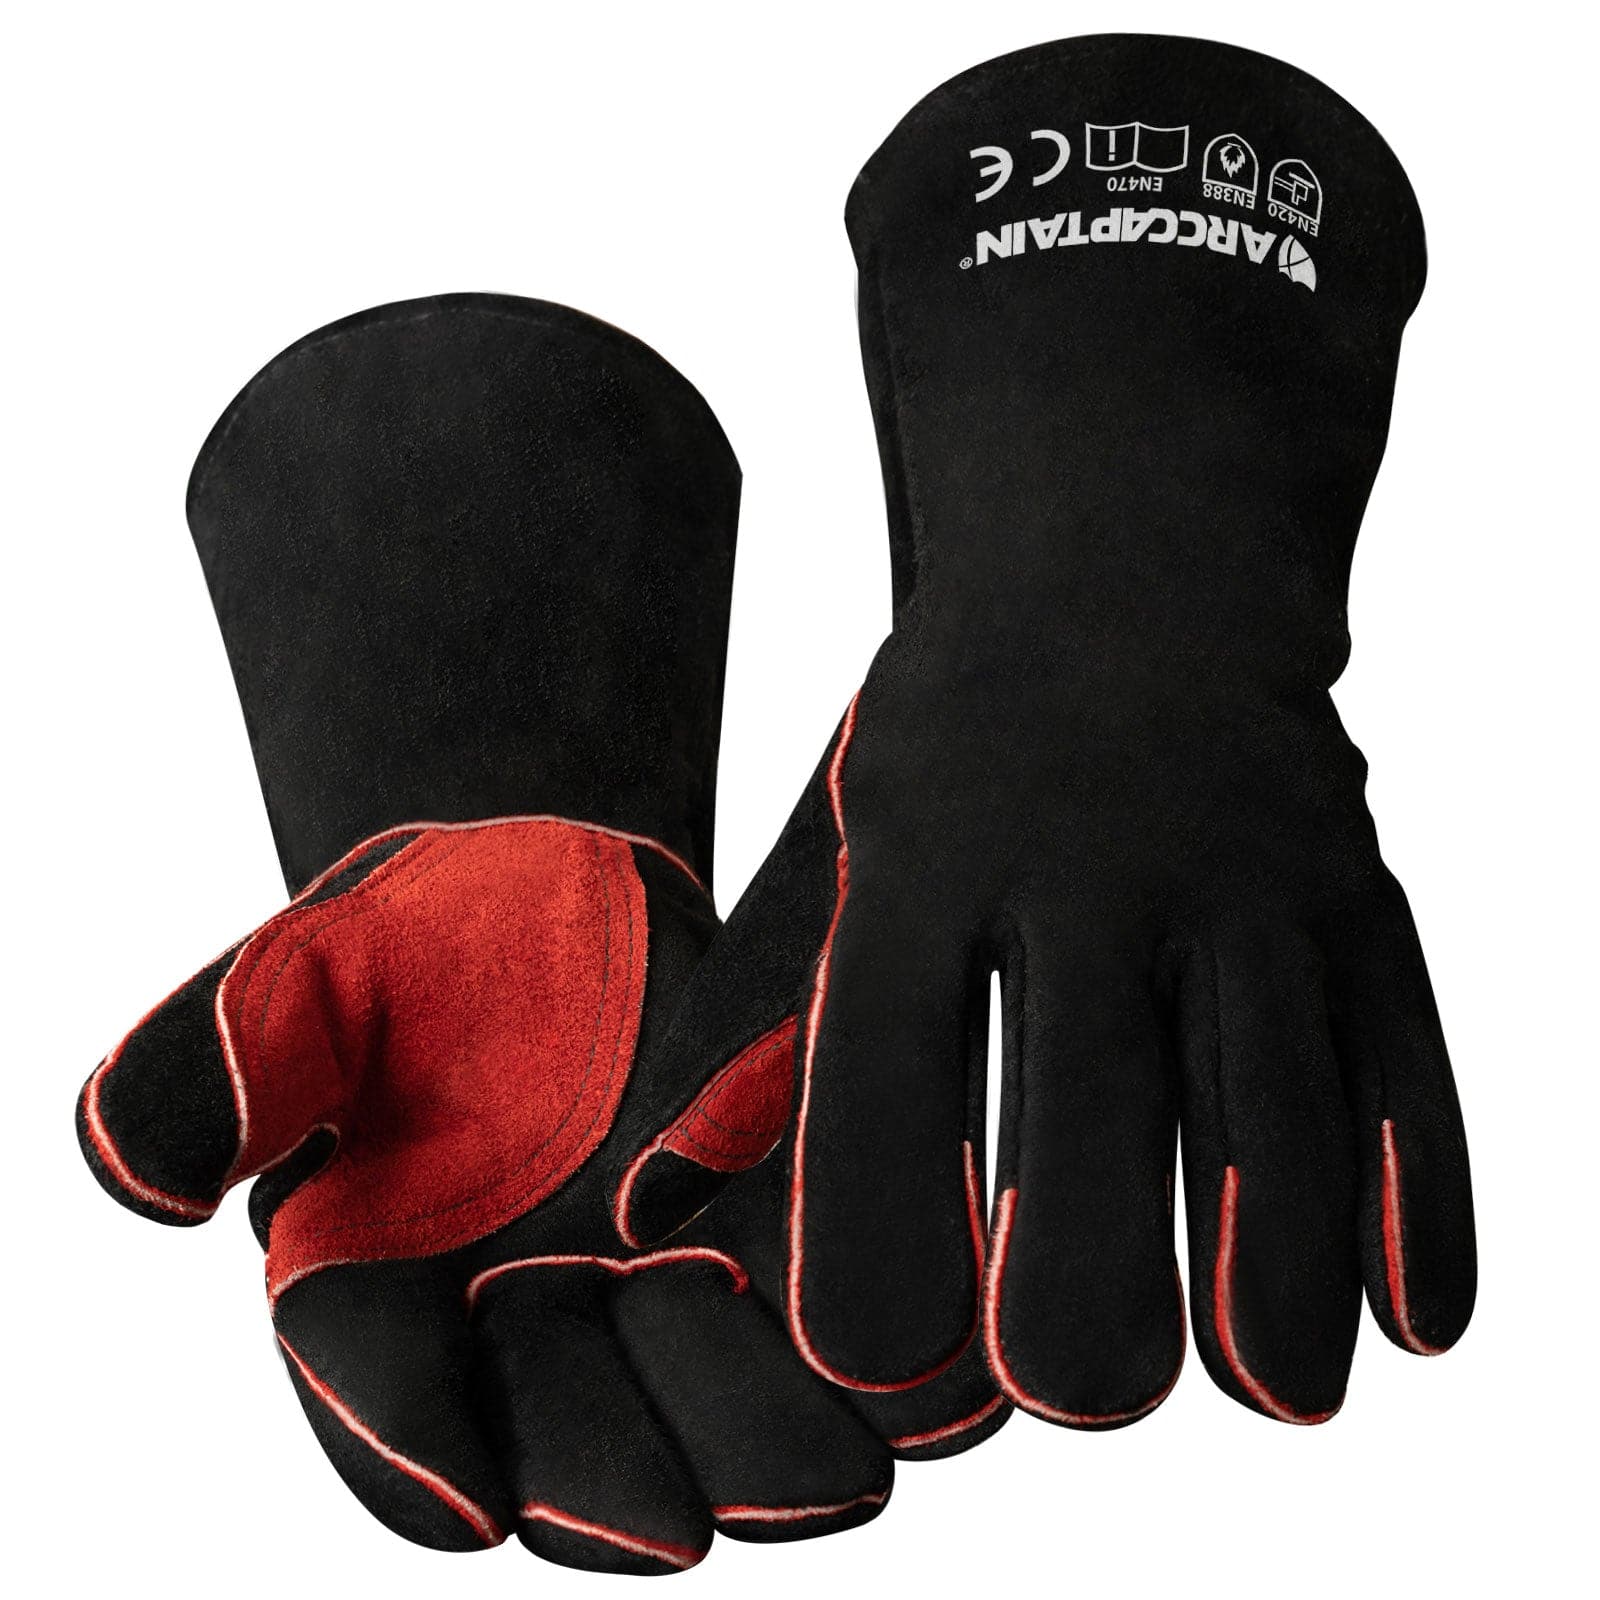 Cotton Work Gloves - Harmony Lab & Safety Supplies